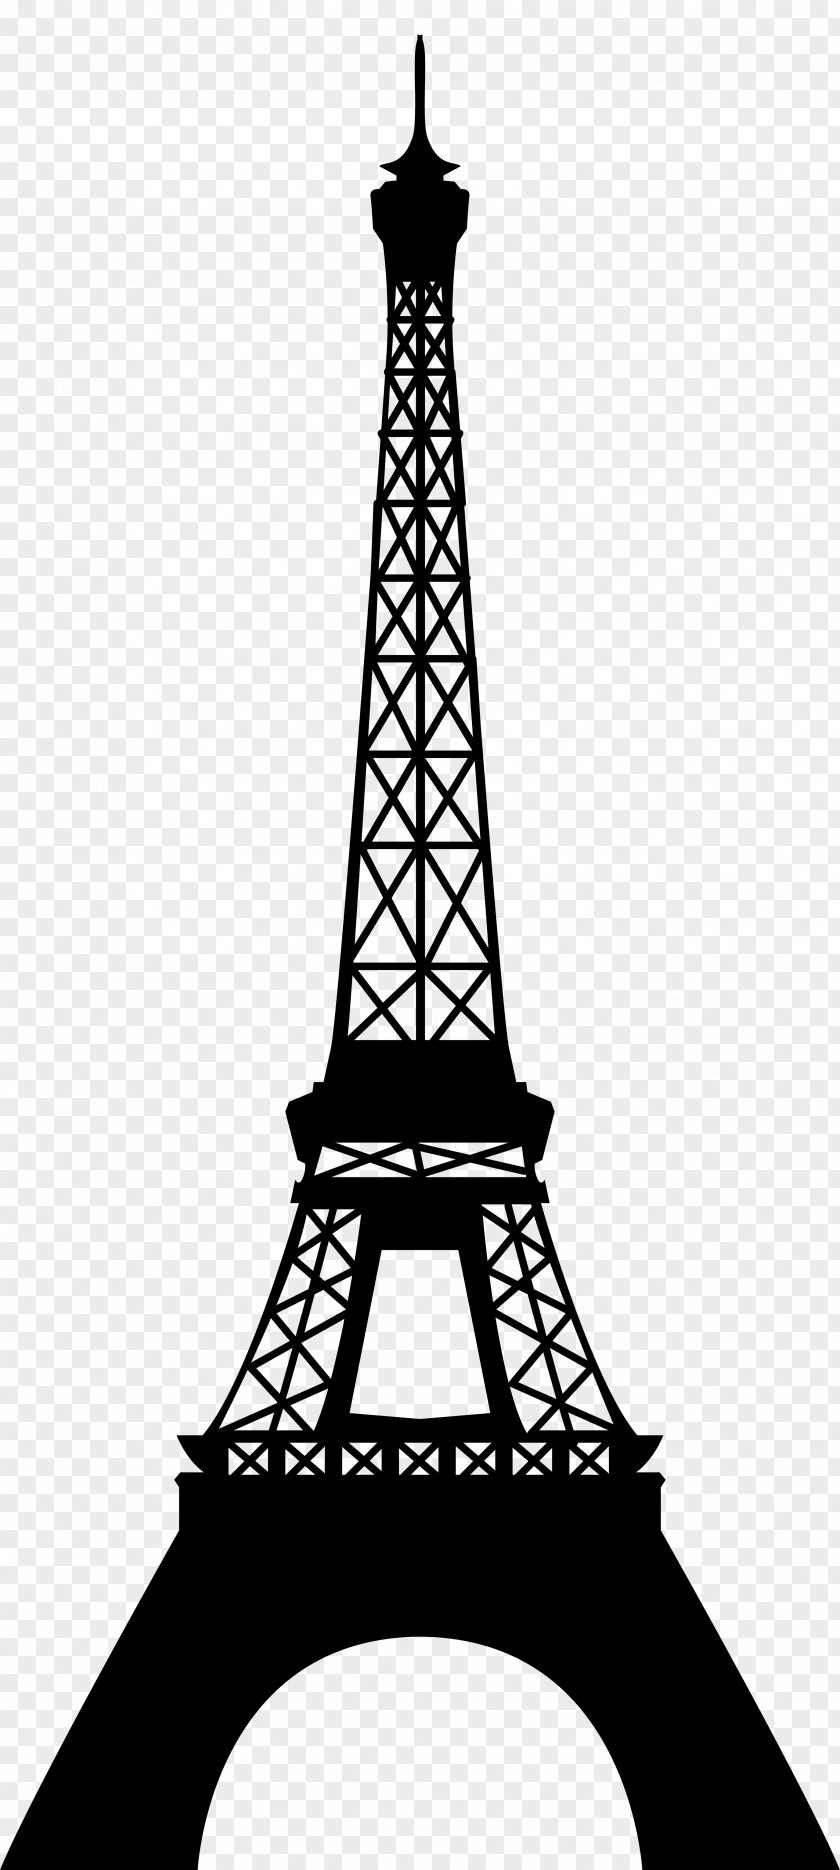 Eiffel Tower Silhouette Transparent Clip Art Image PNG